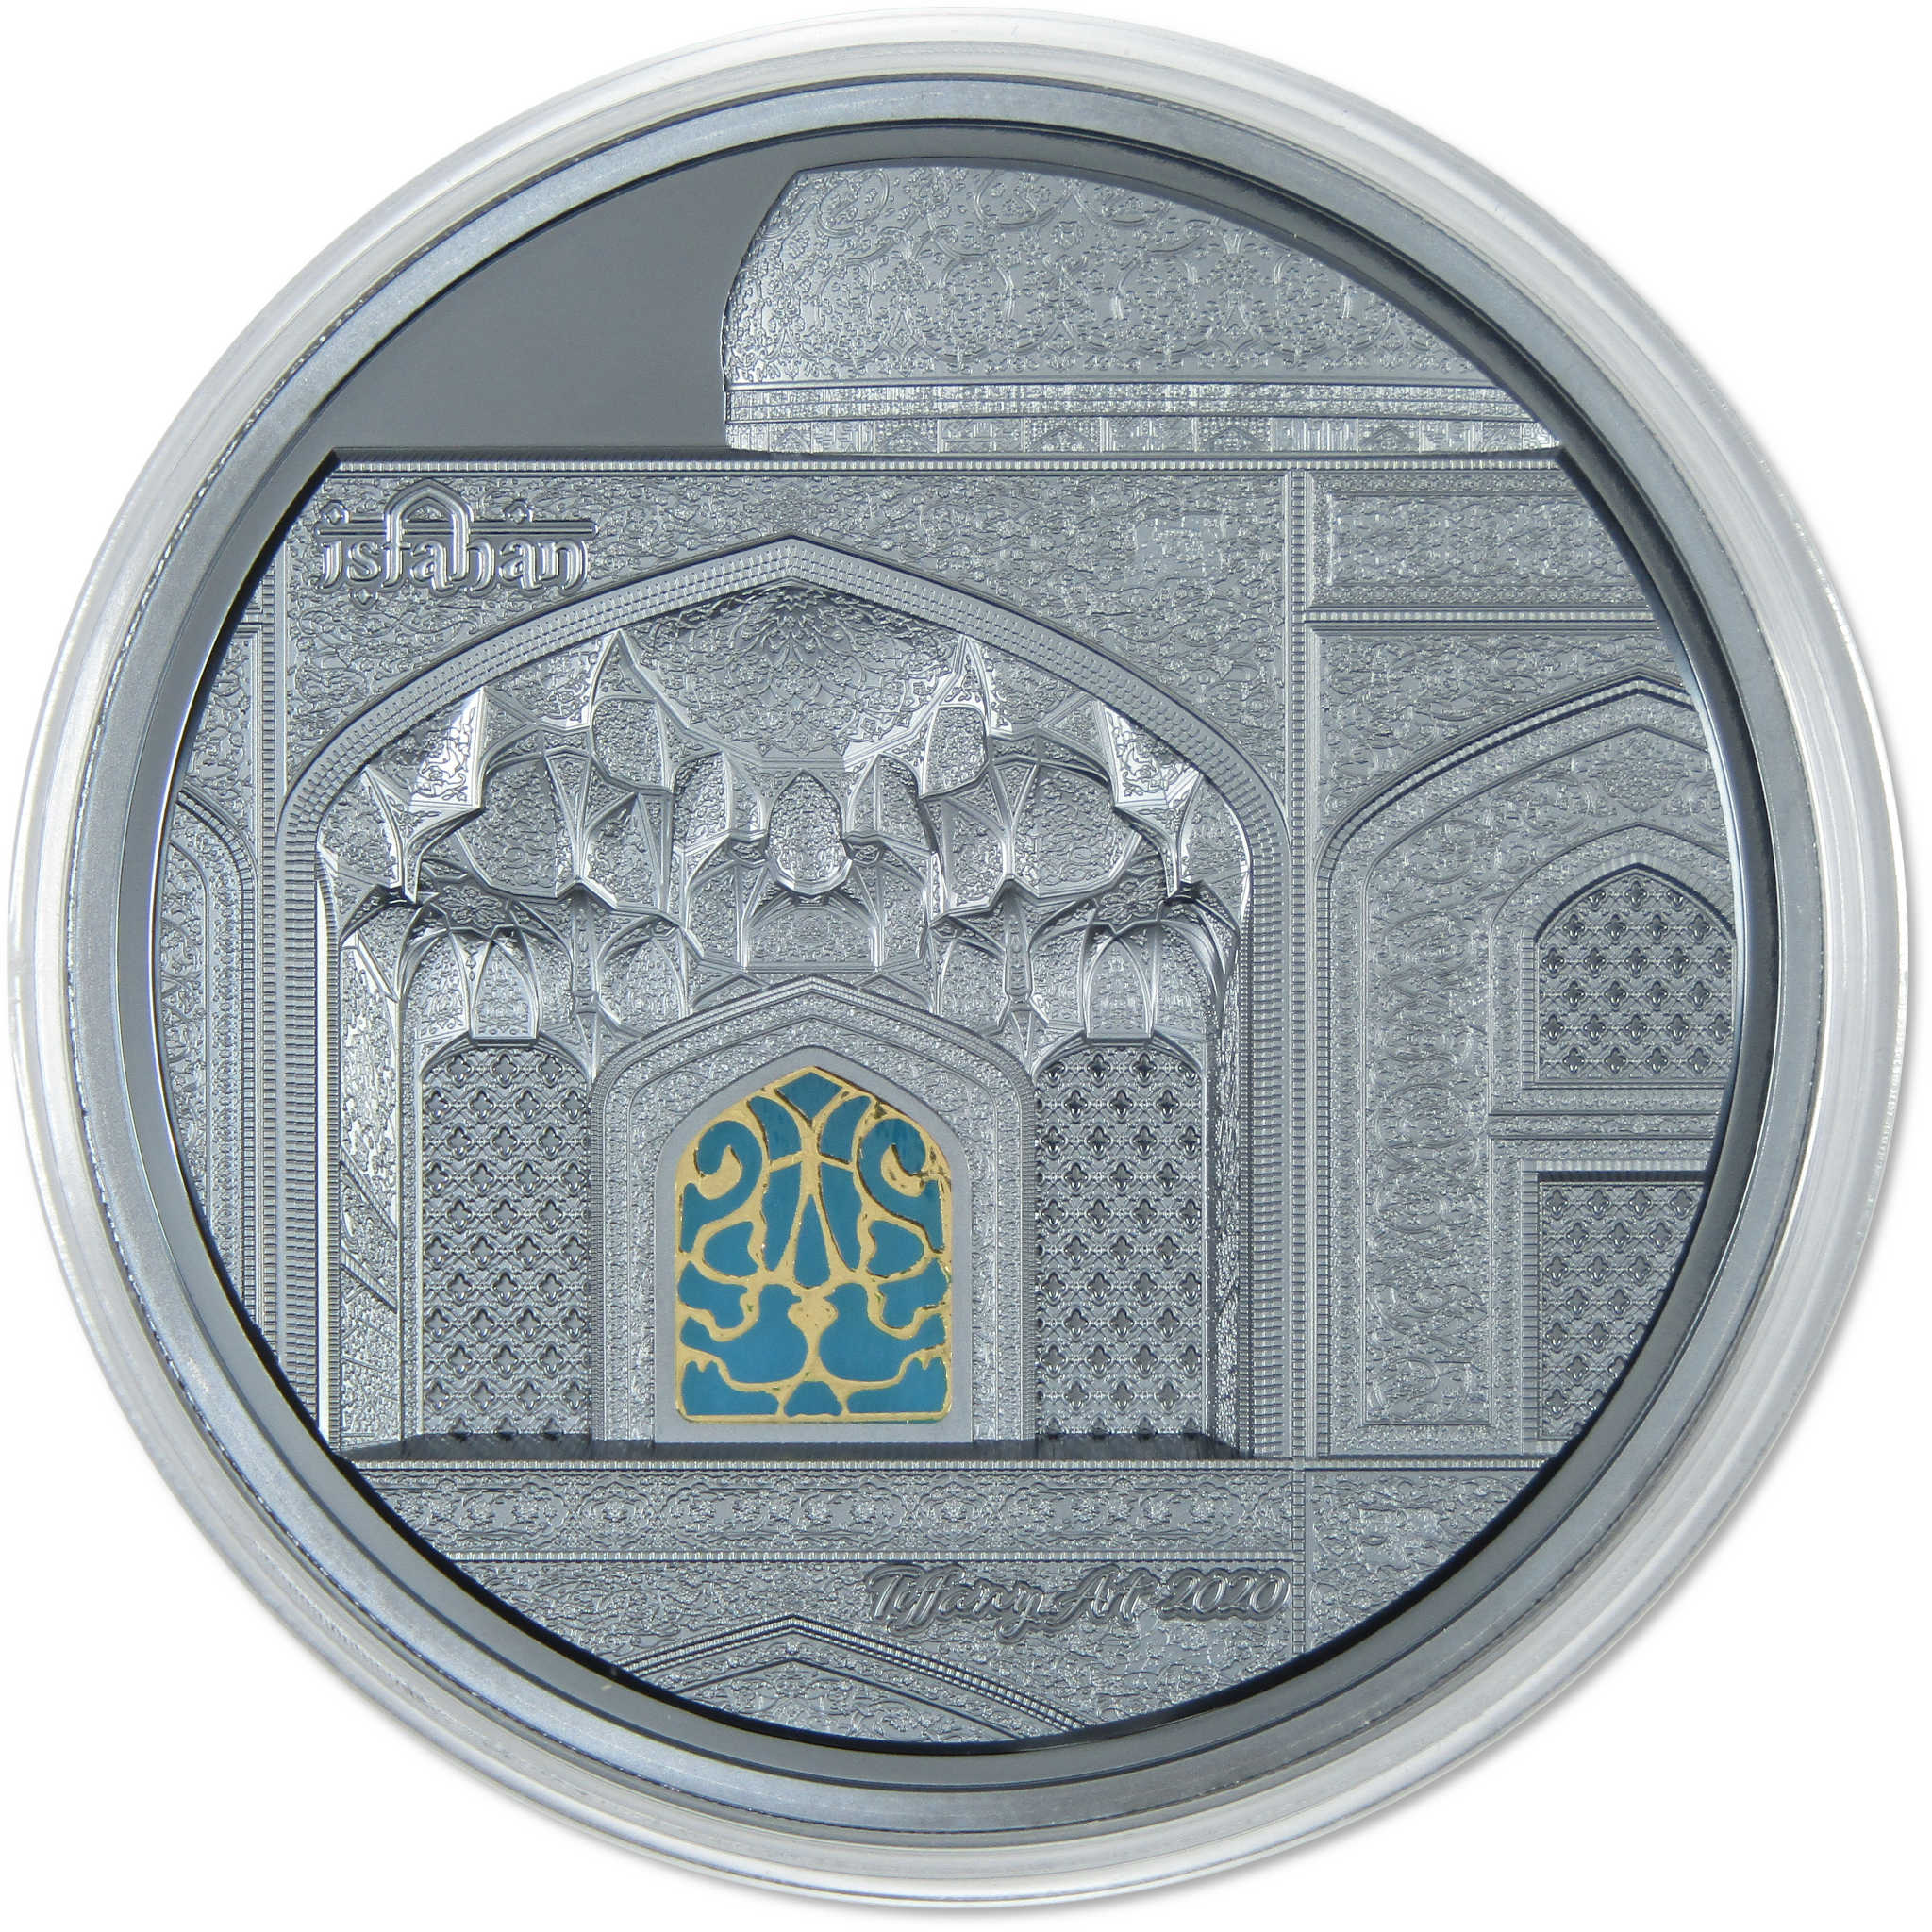 Tiffany Art Isfahan 5 oz .999 Silver $25 Proof Coin 2020 Palau COA